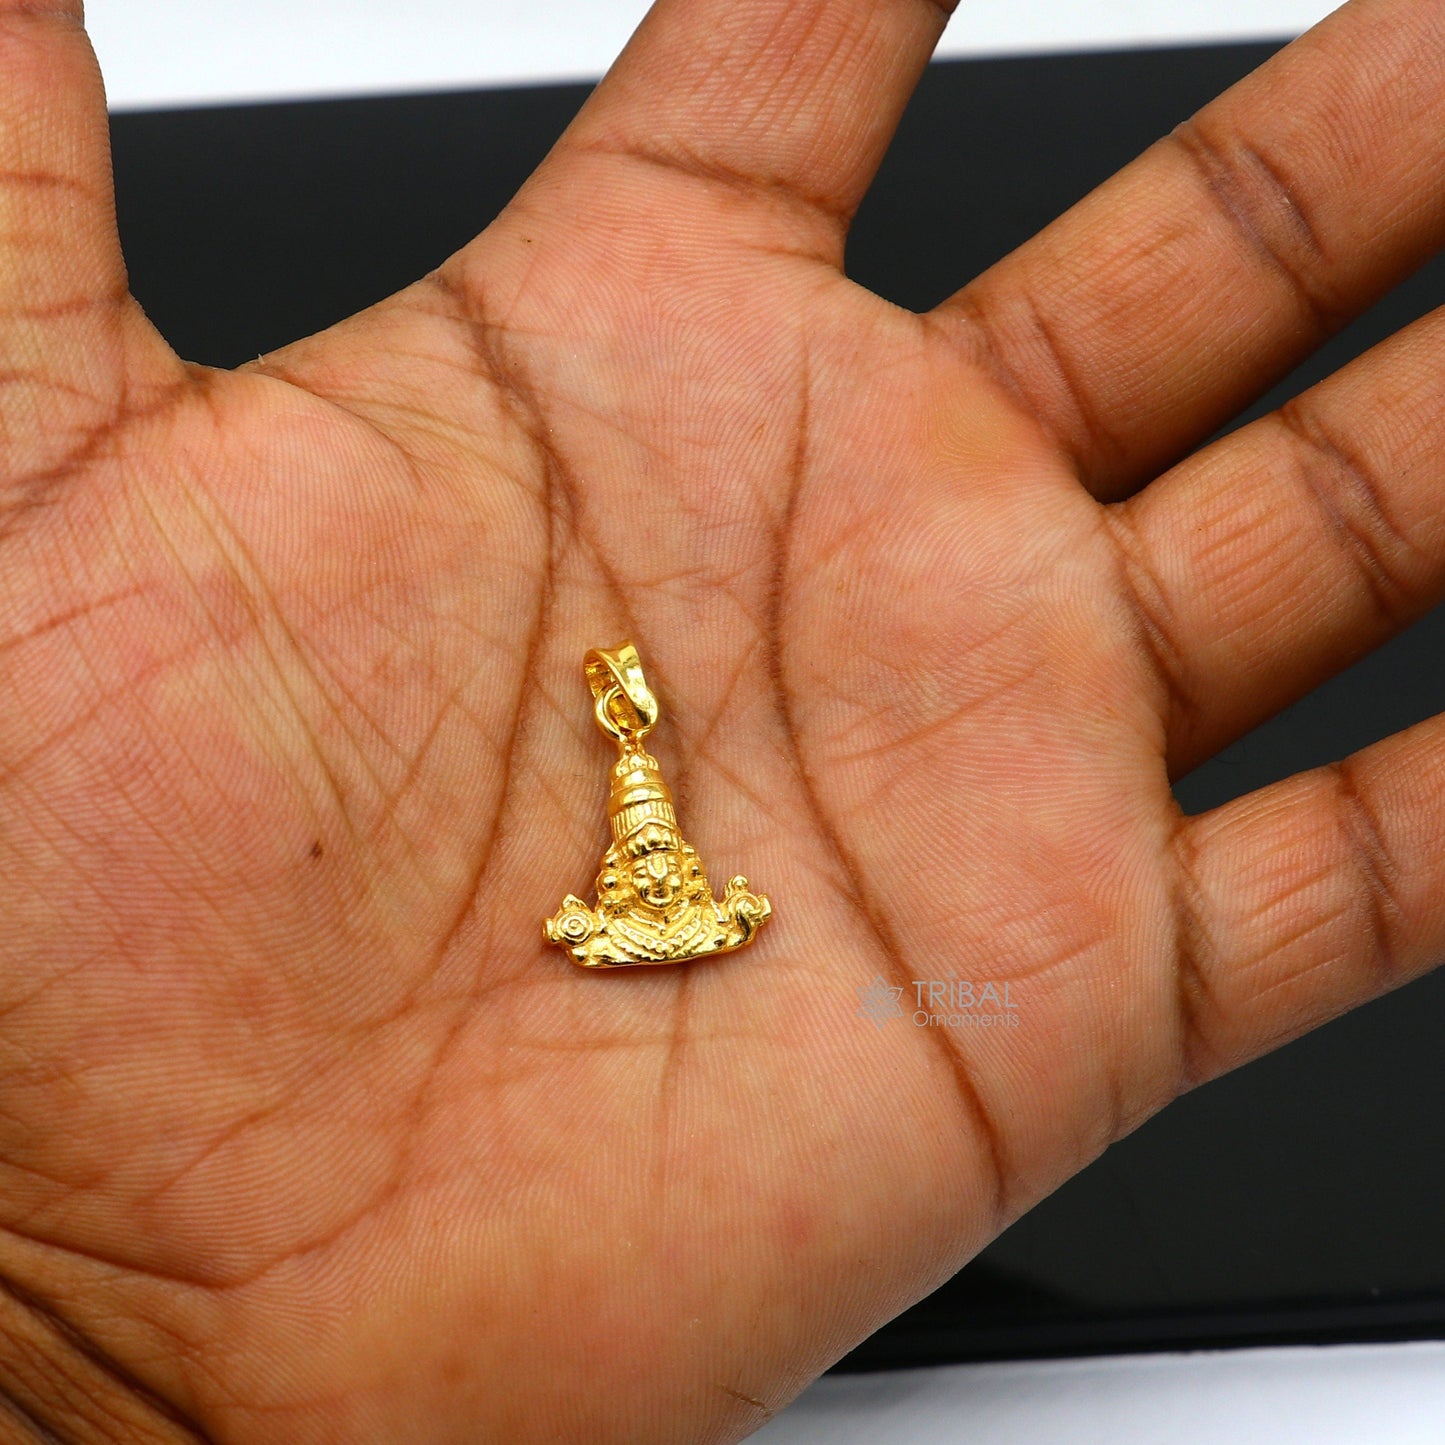 925 sterling silver vintage stylish idol Tirupati balaji amazing design Gold polished over silver  Krishna pendant gifting jewelry nsp599 - TRIBAL ORNAMENTS